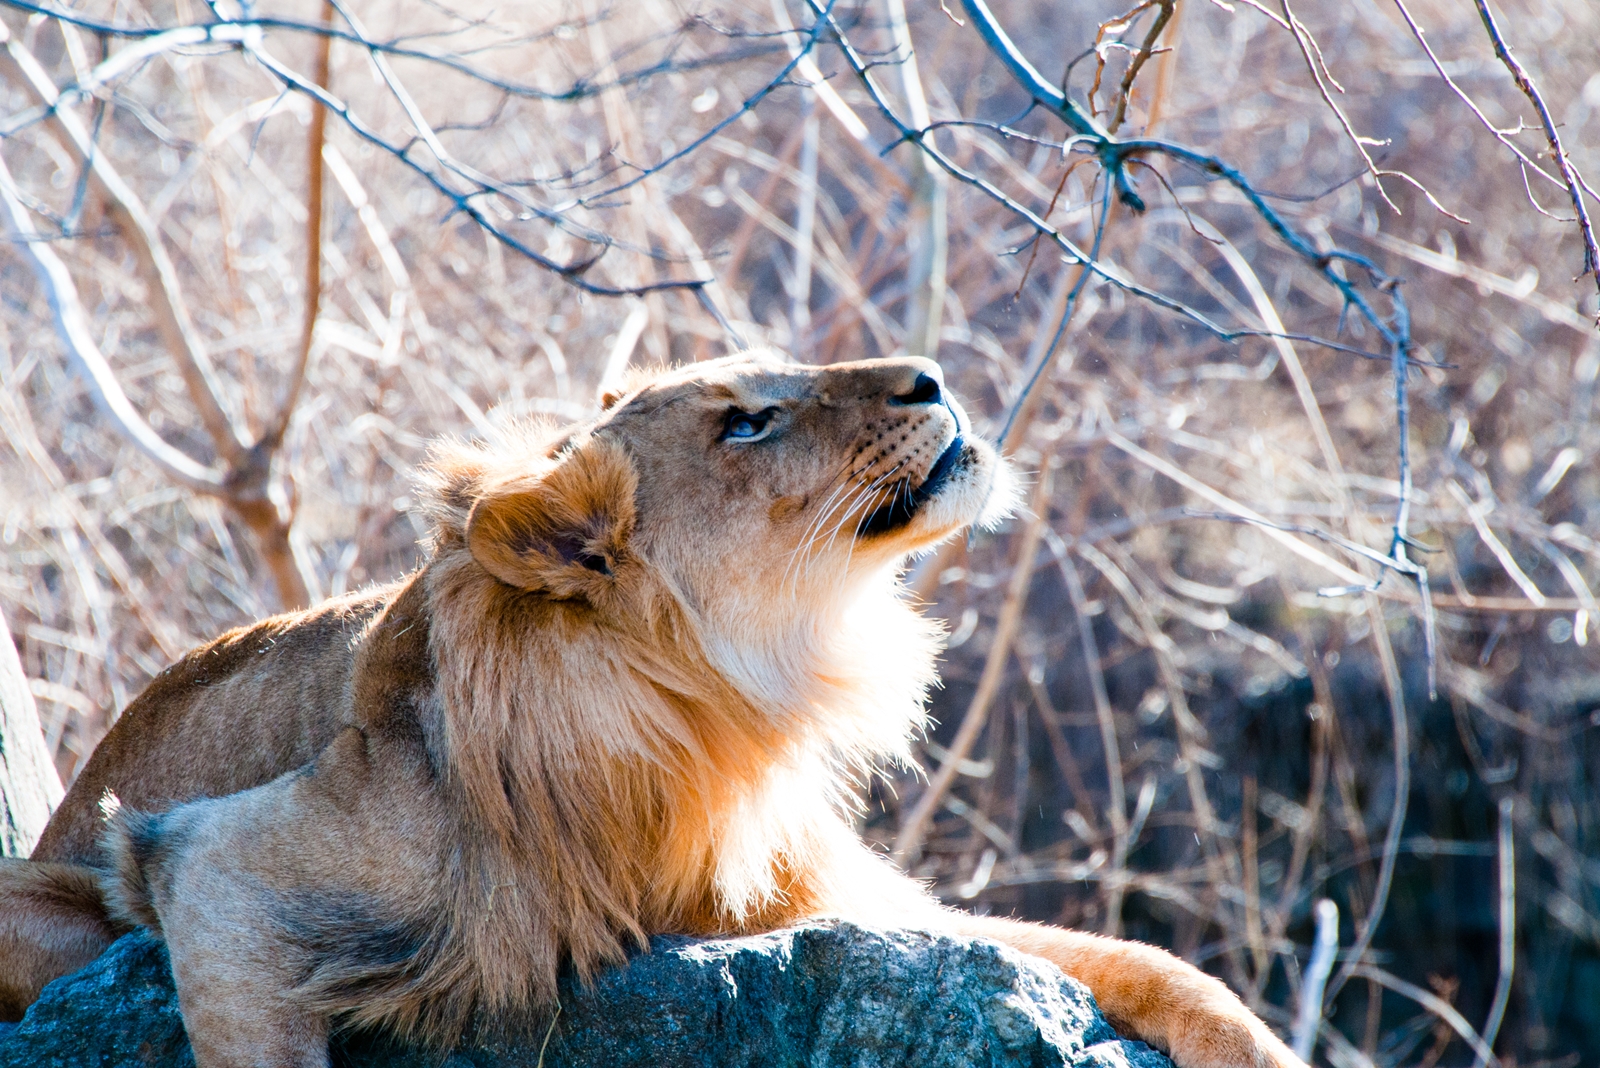 Lion at Bronx Zoo